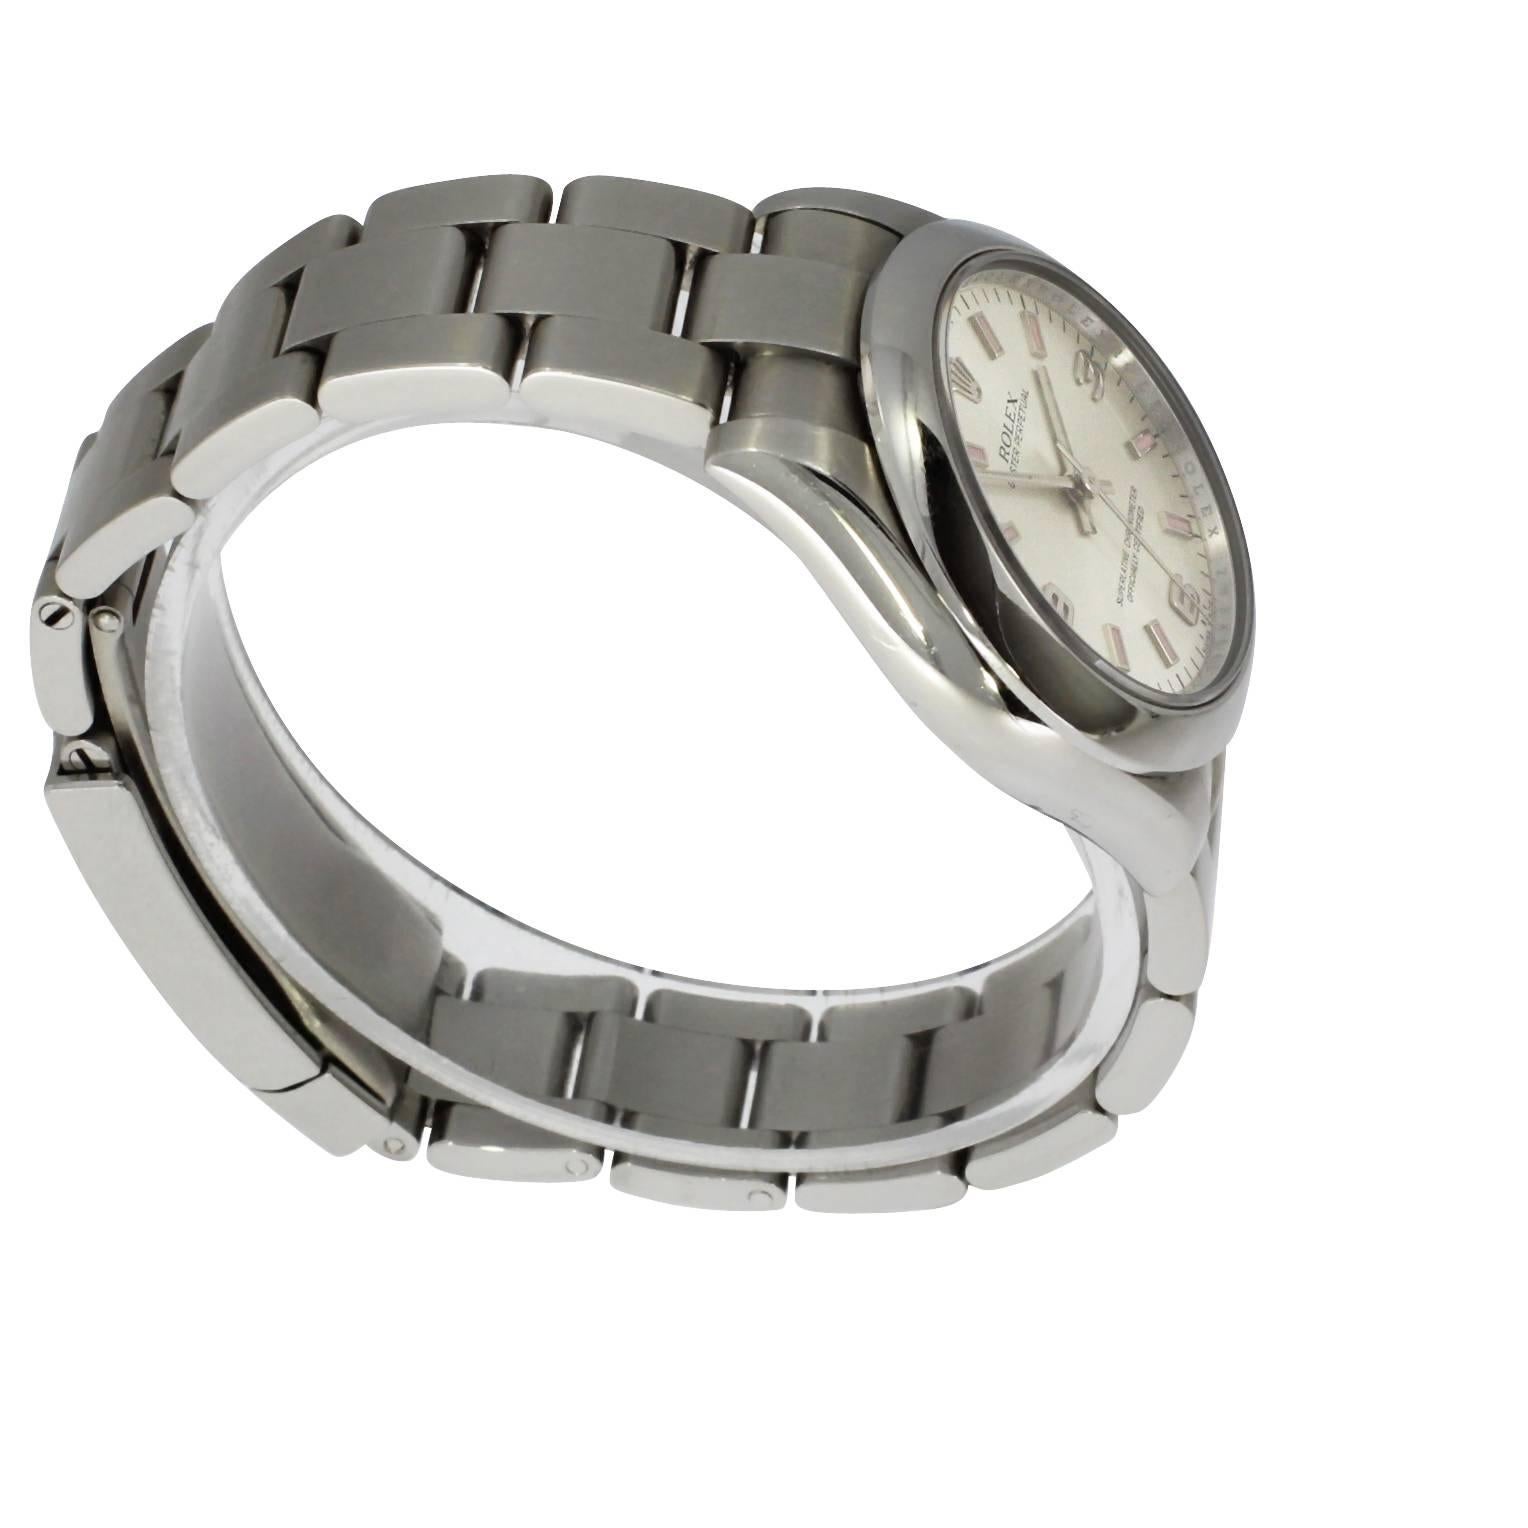 Rolex Stainless Steel Date Oyster Bracelet Midsize Wristwatch Ref 177200, 2006 For Sale 3